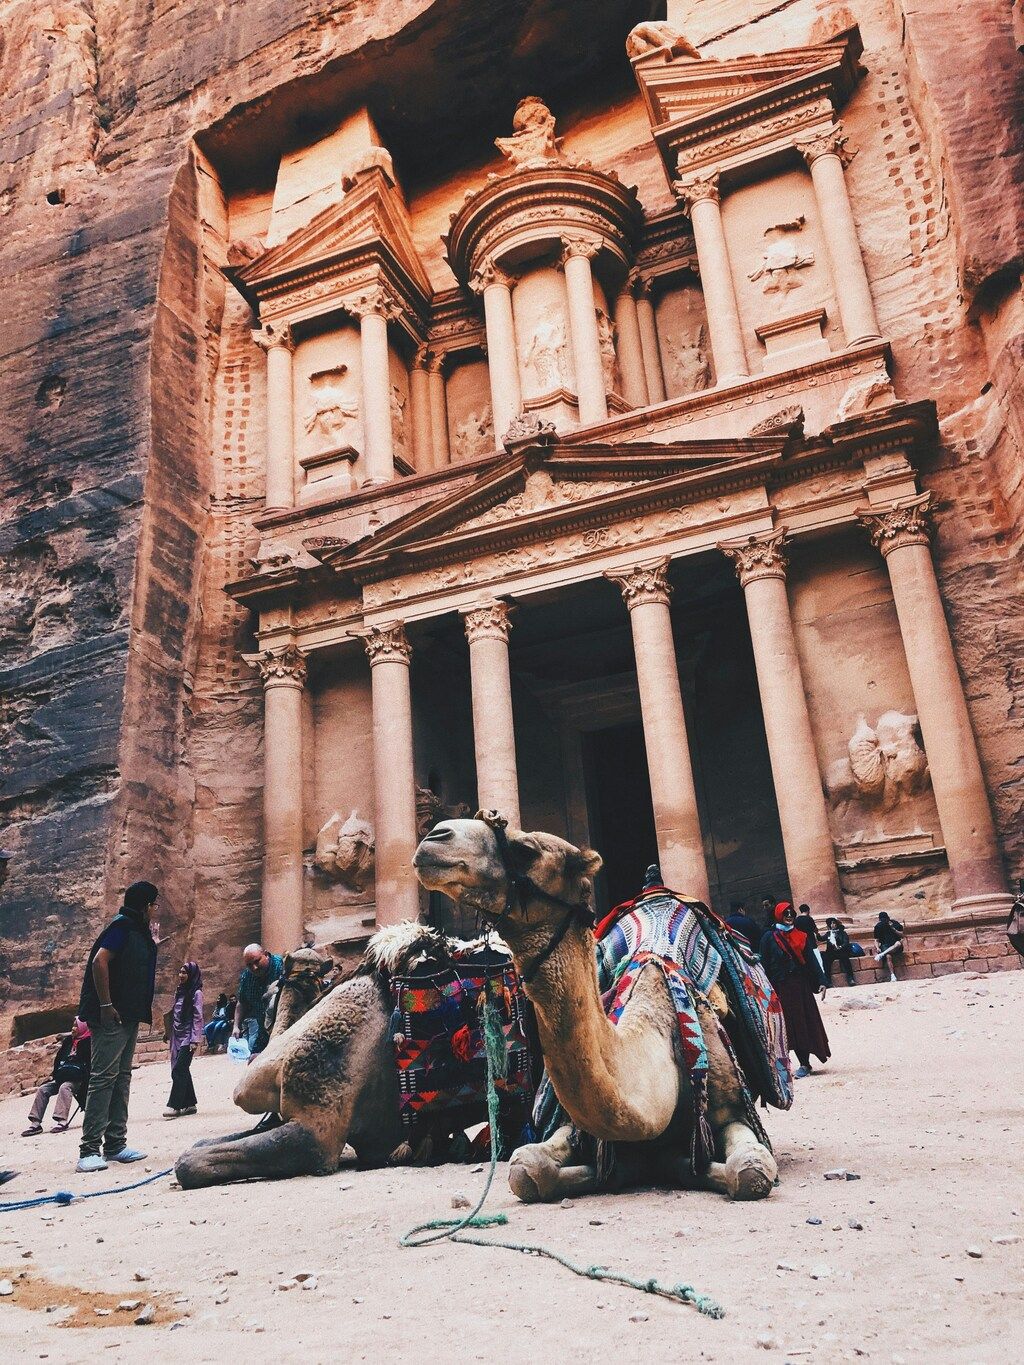 the iconic Treasury of Petra, Jordan